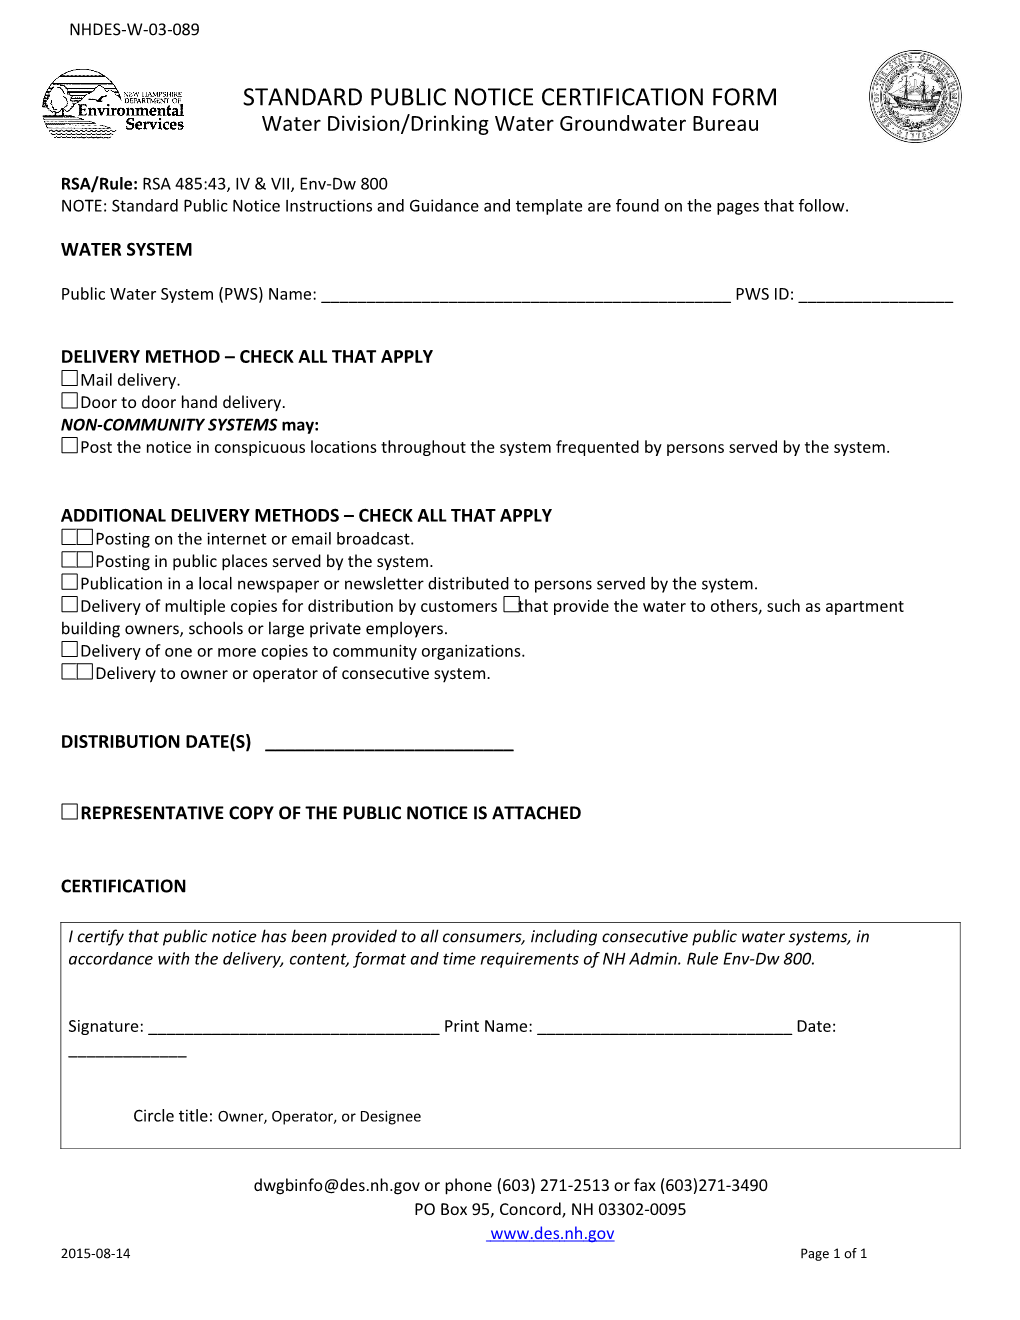 Standard Public Notice Certification Form